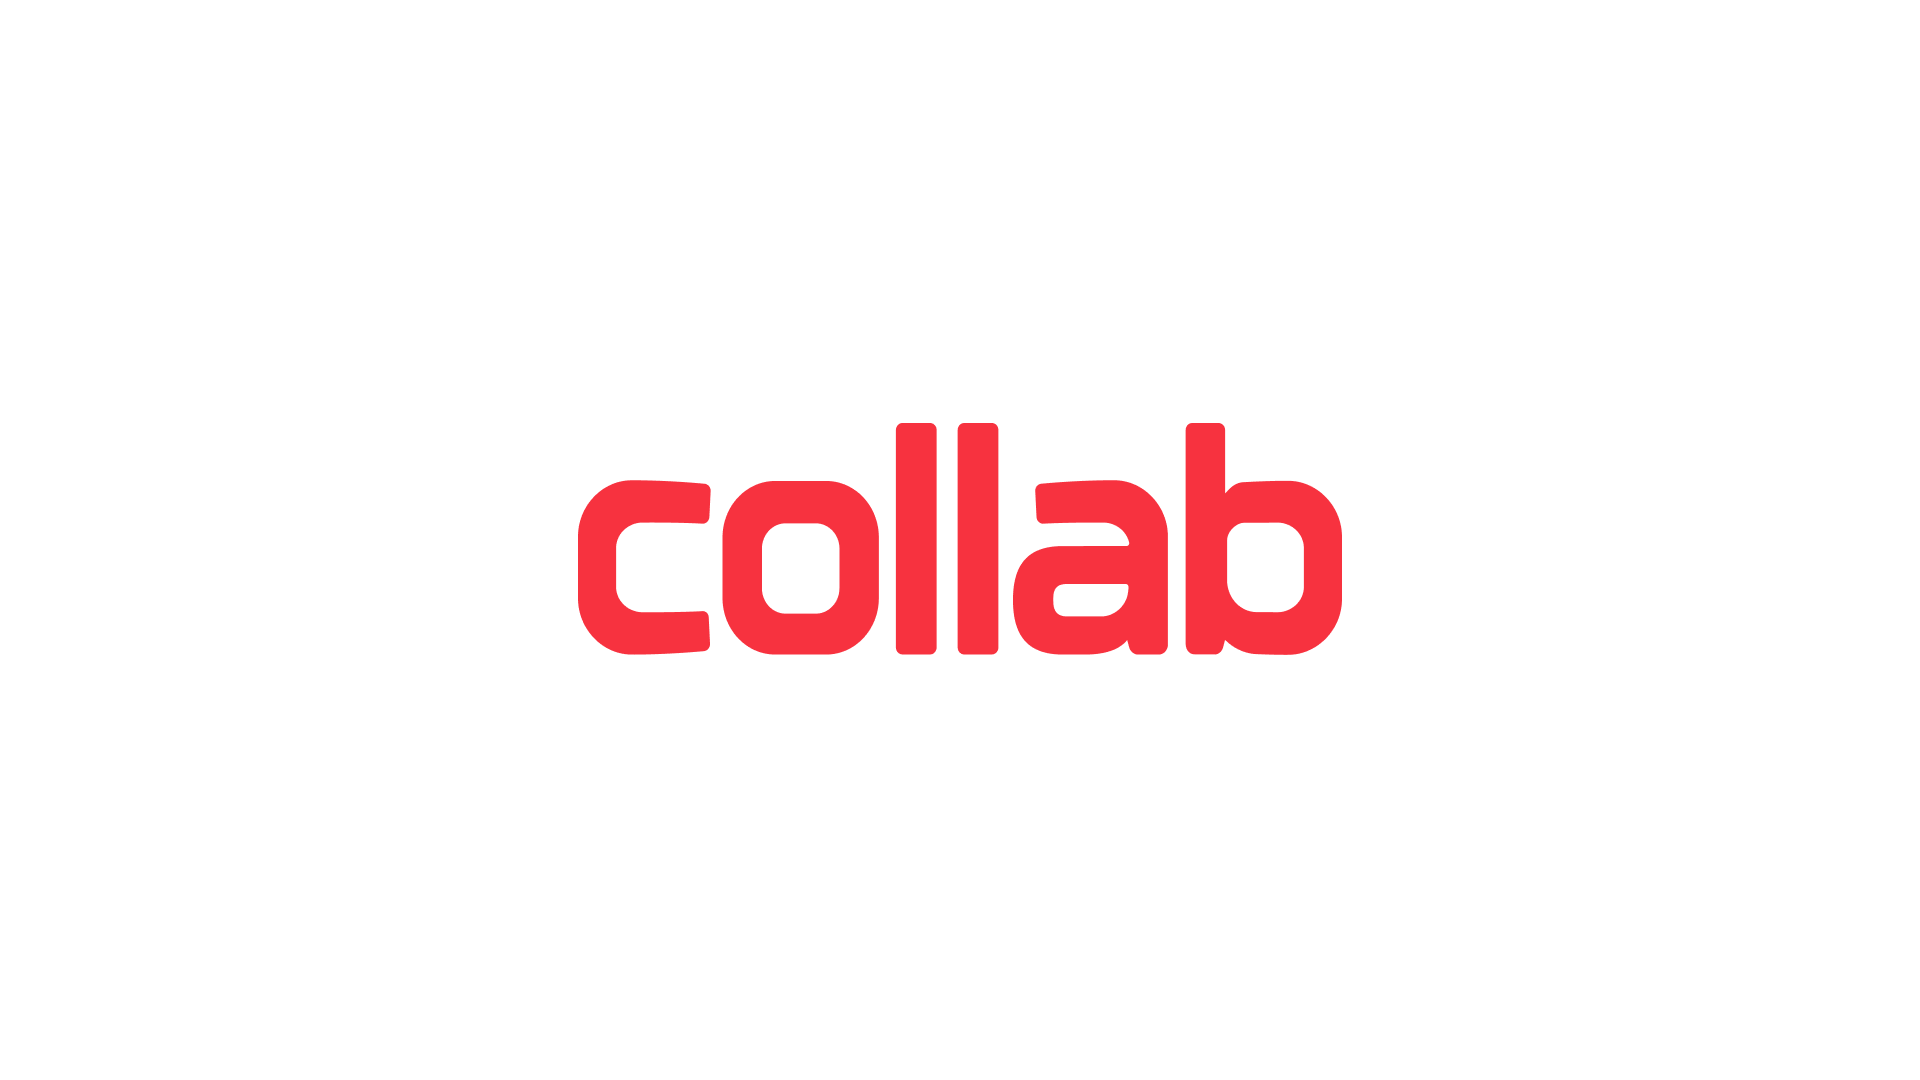 Collab's logo